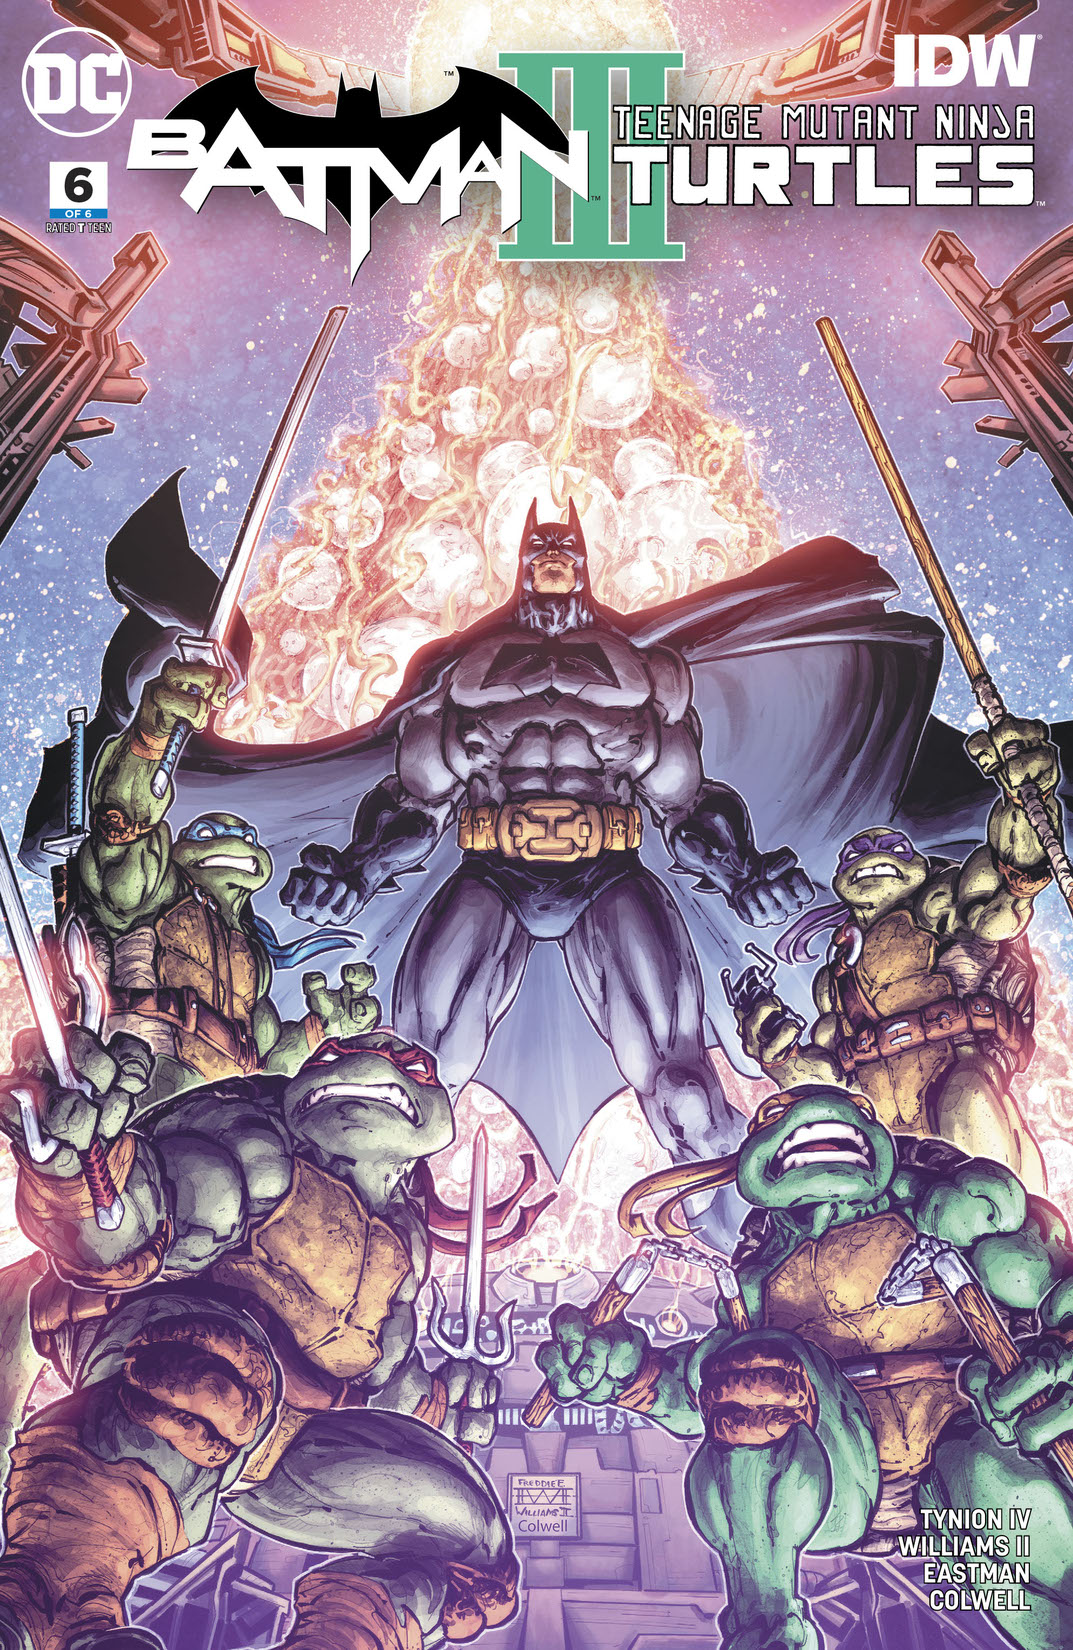 Batman/Teenage Mutant Ninja Turtles III #6 preview images